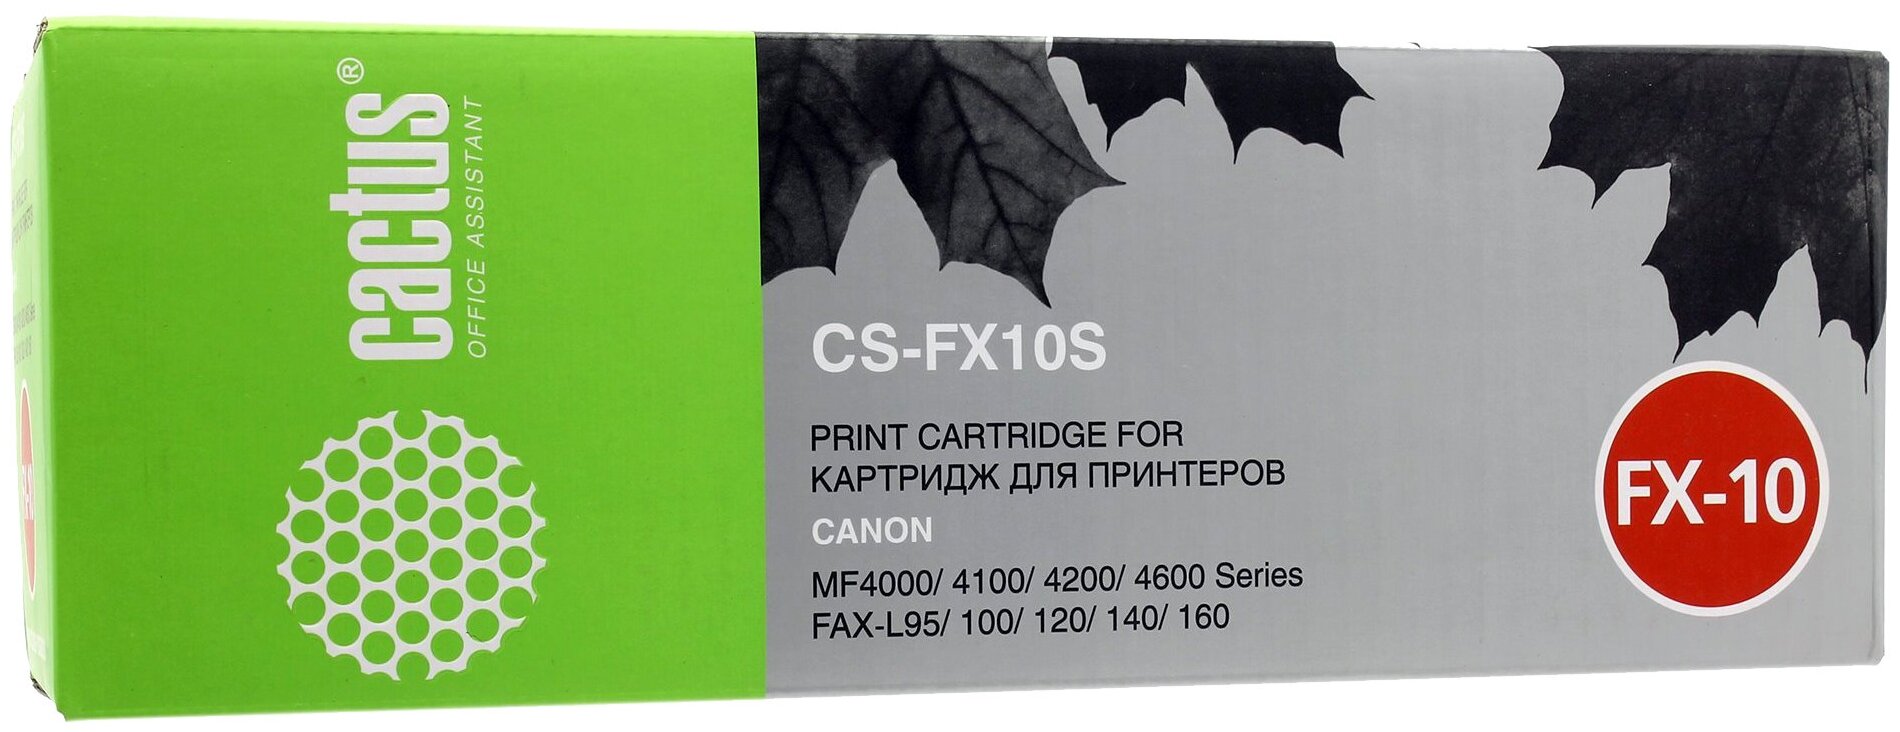 Картридж Cactus CS-FX10S FX-10 черный, для CANON L100/L120/4140/MF4380dn/D420/D480, ресурс до 2000 страниц